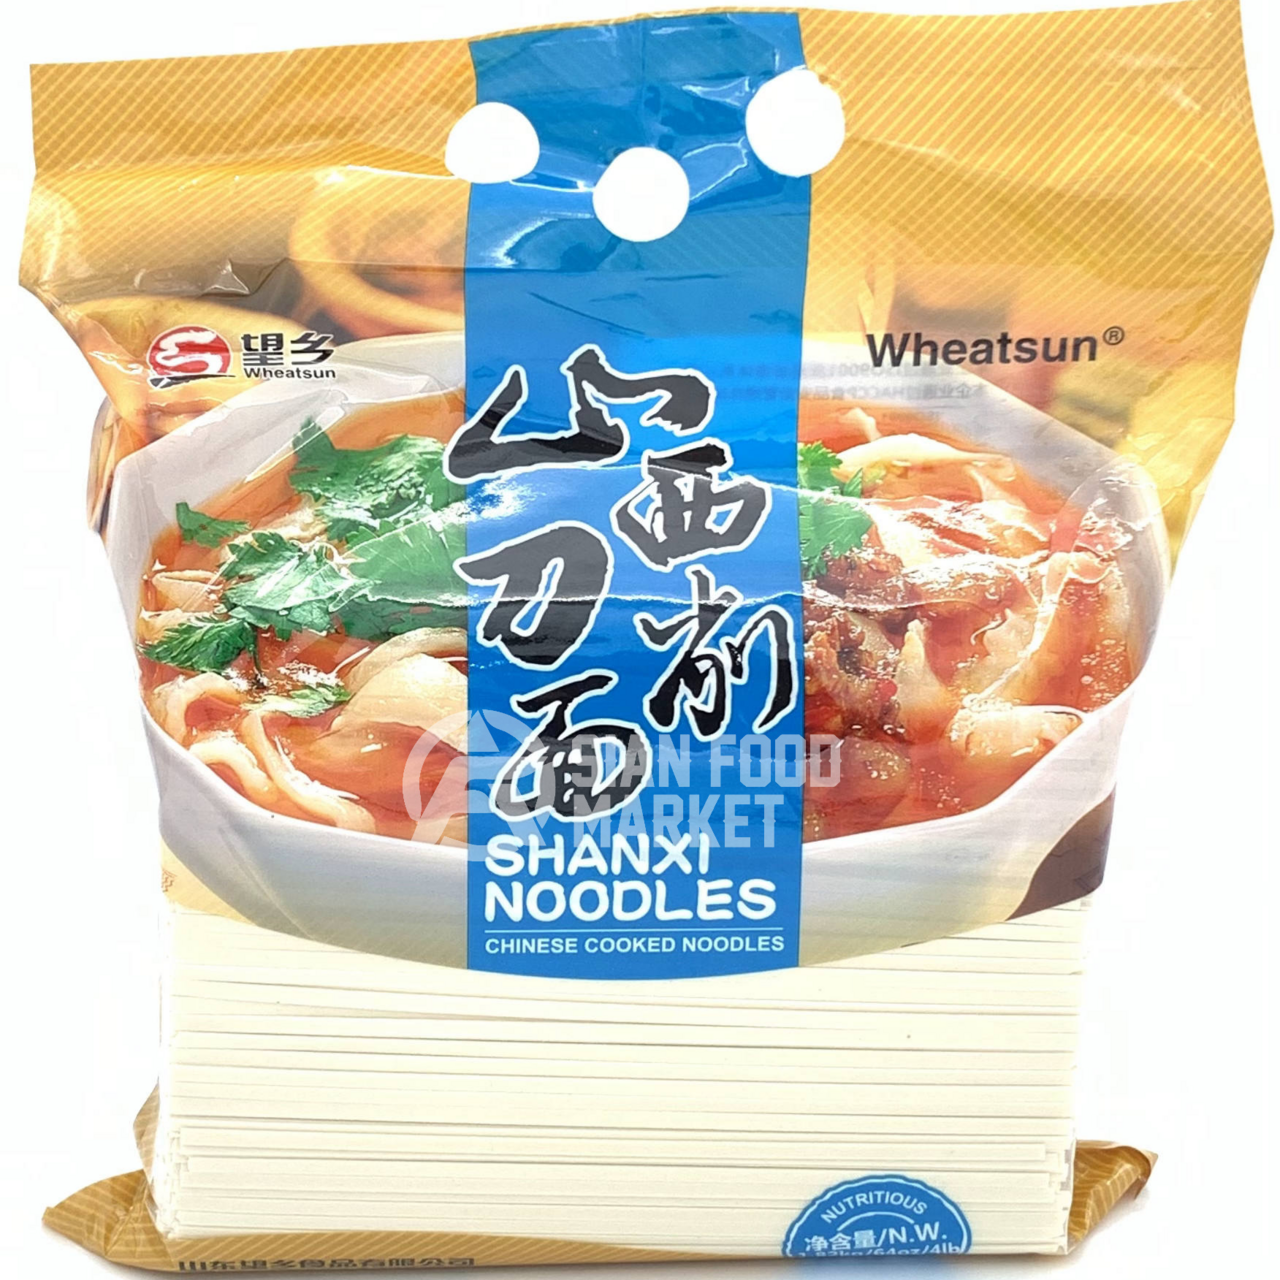 Wheatsun Shanxi Noodles 1.82Kg